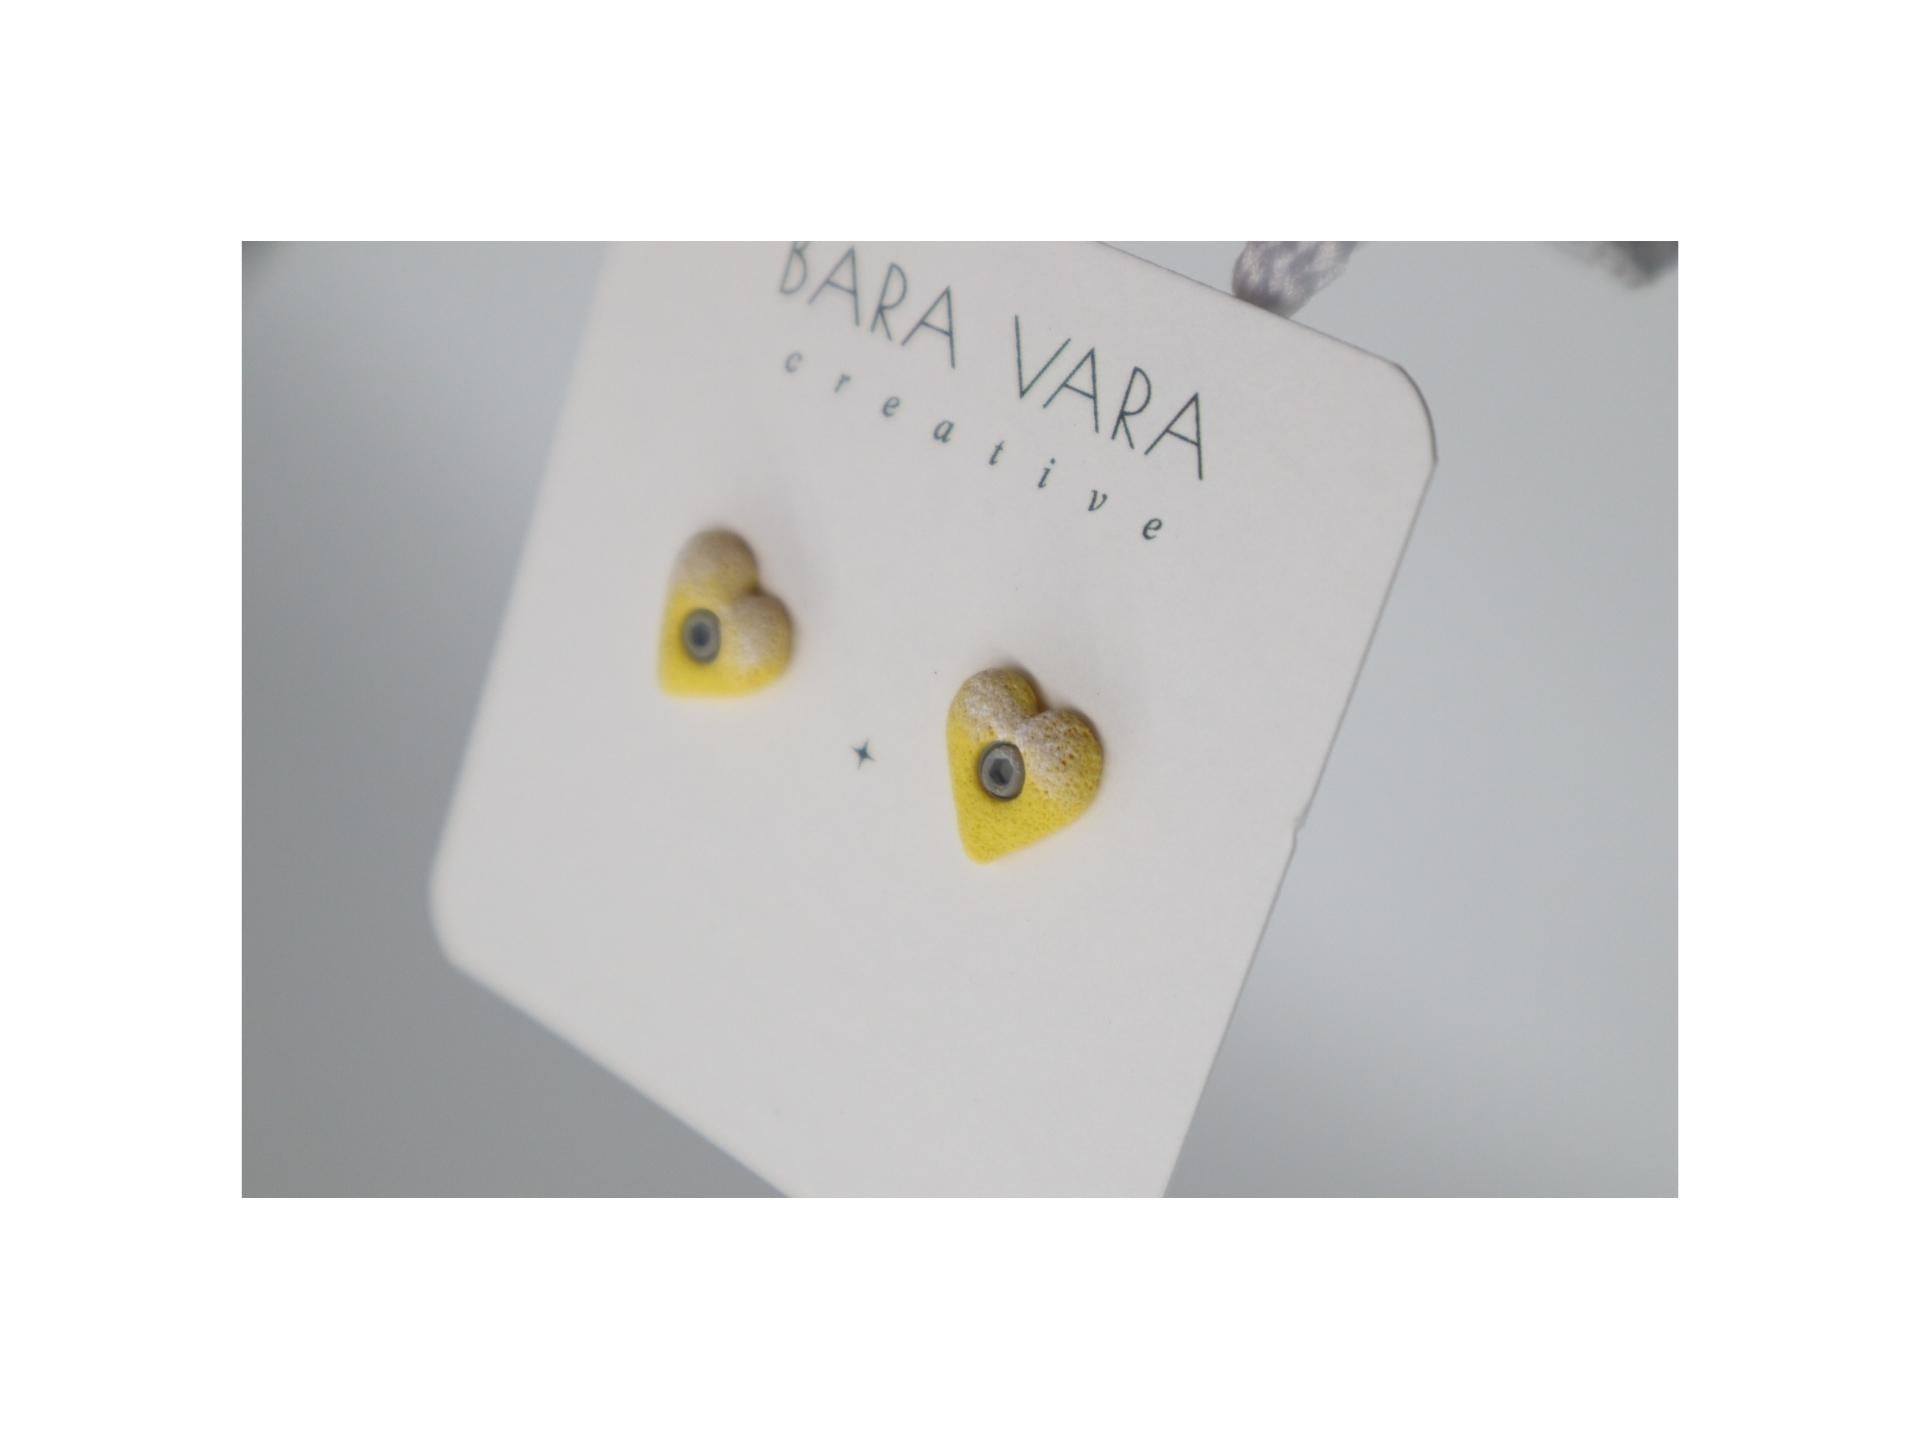 Bara Vara Creative Earrings - Yellow Heart - Happy Biner